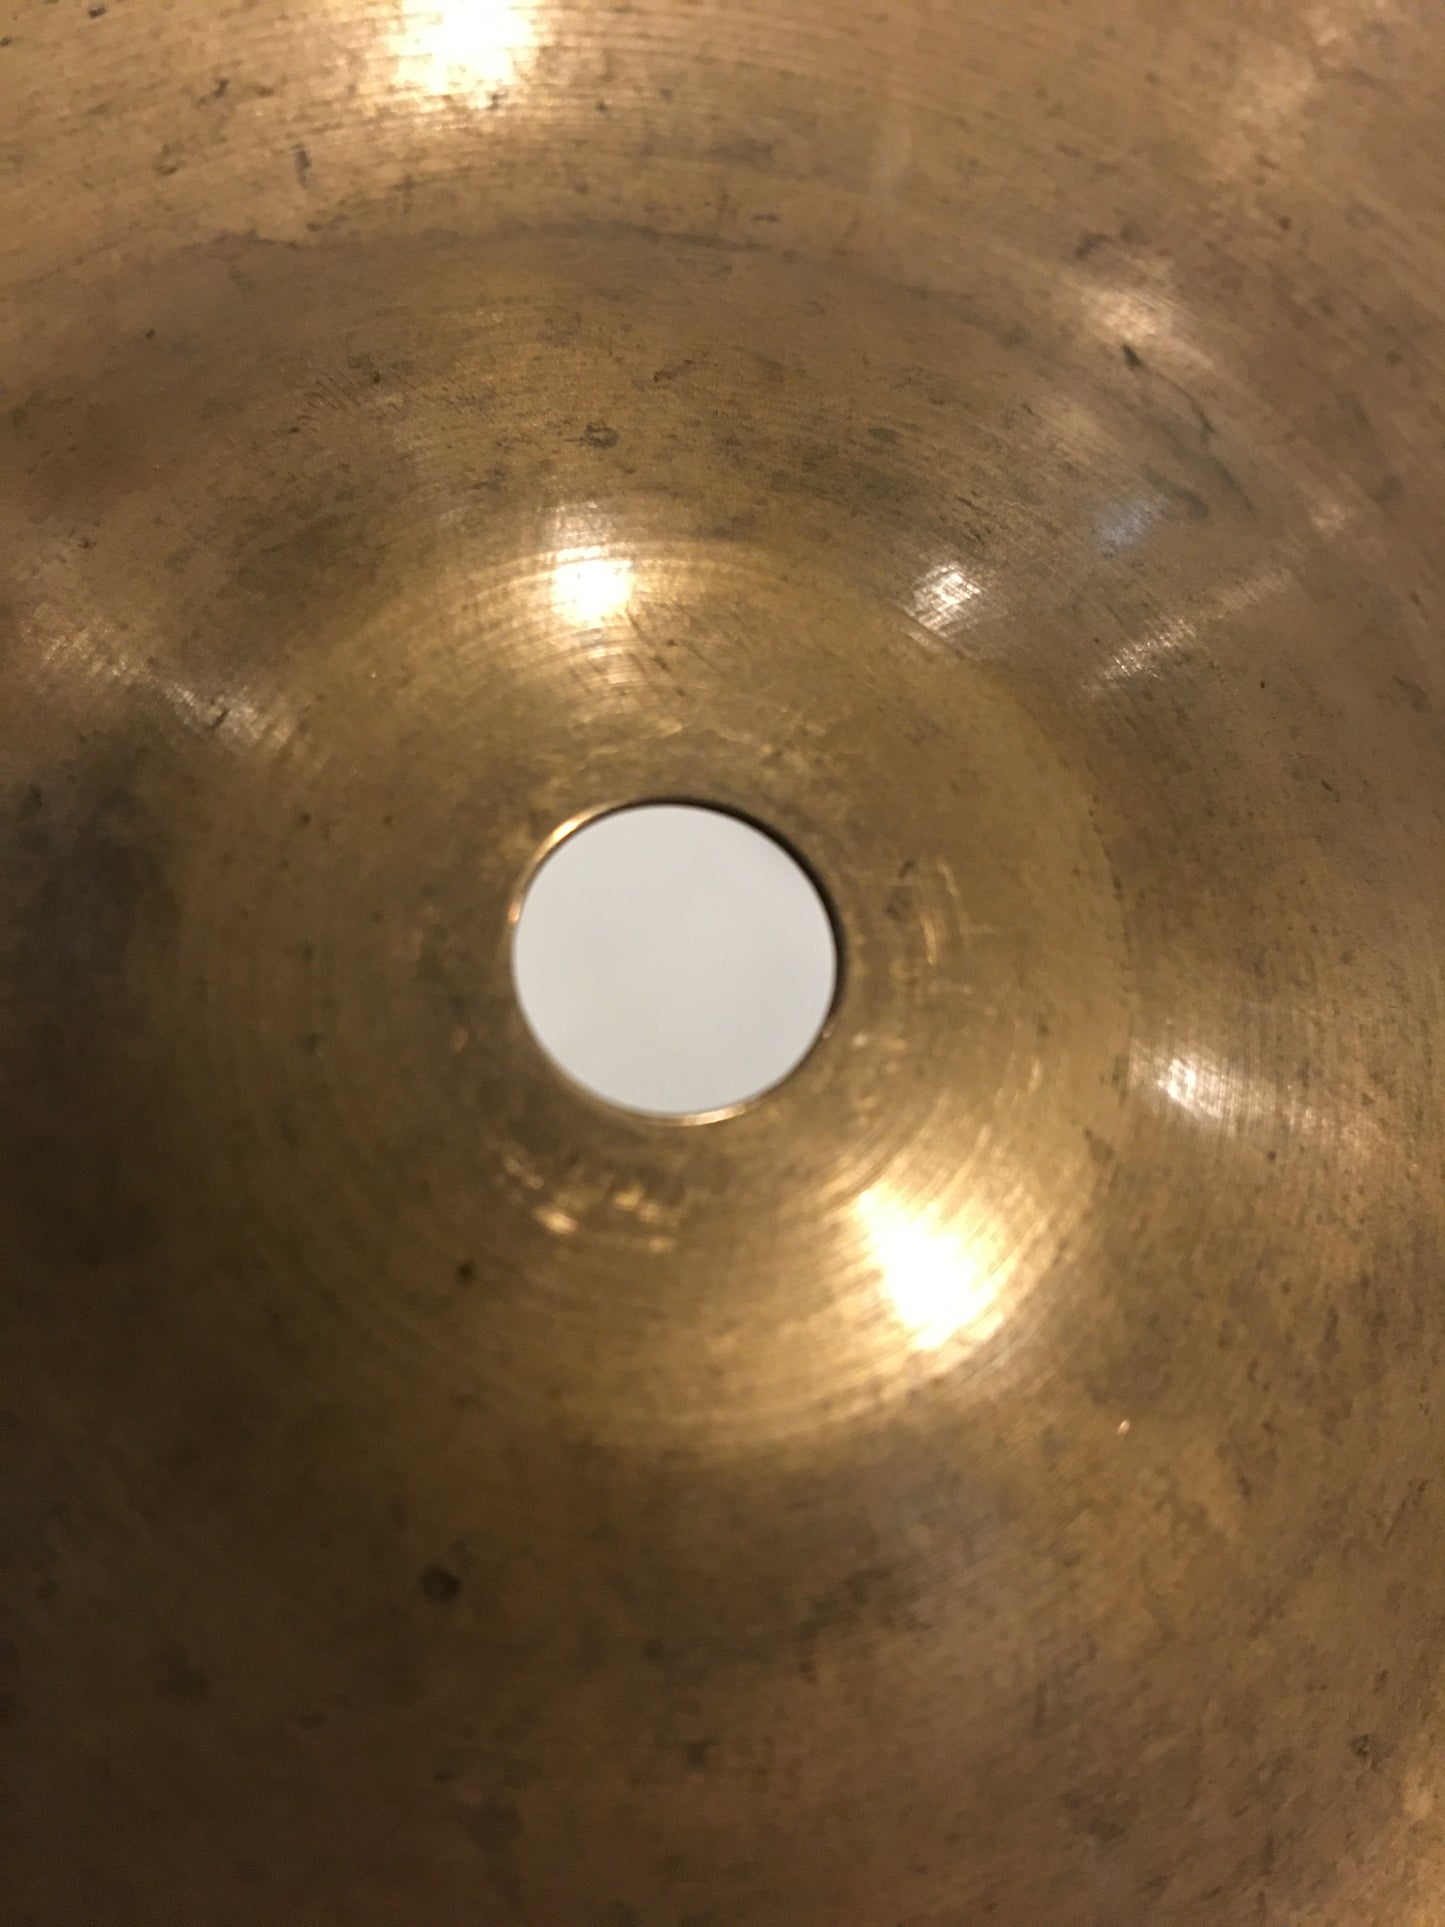 11" Vintage Kassan Made in Italy Splash Cymbal 302g #278